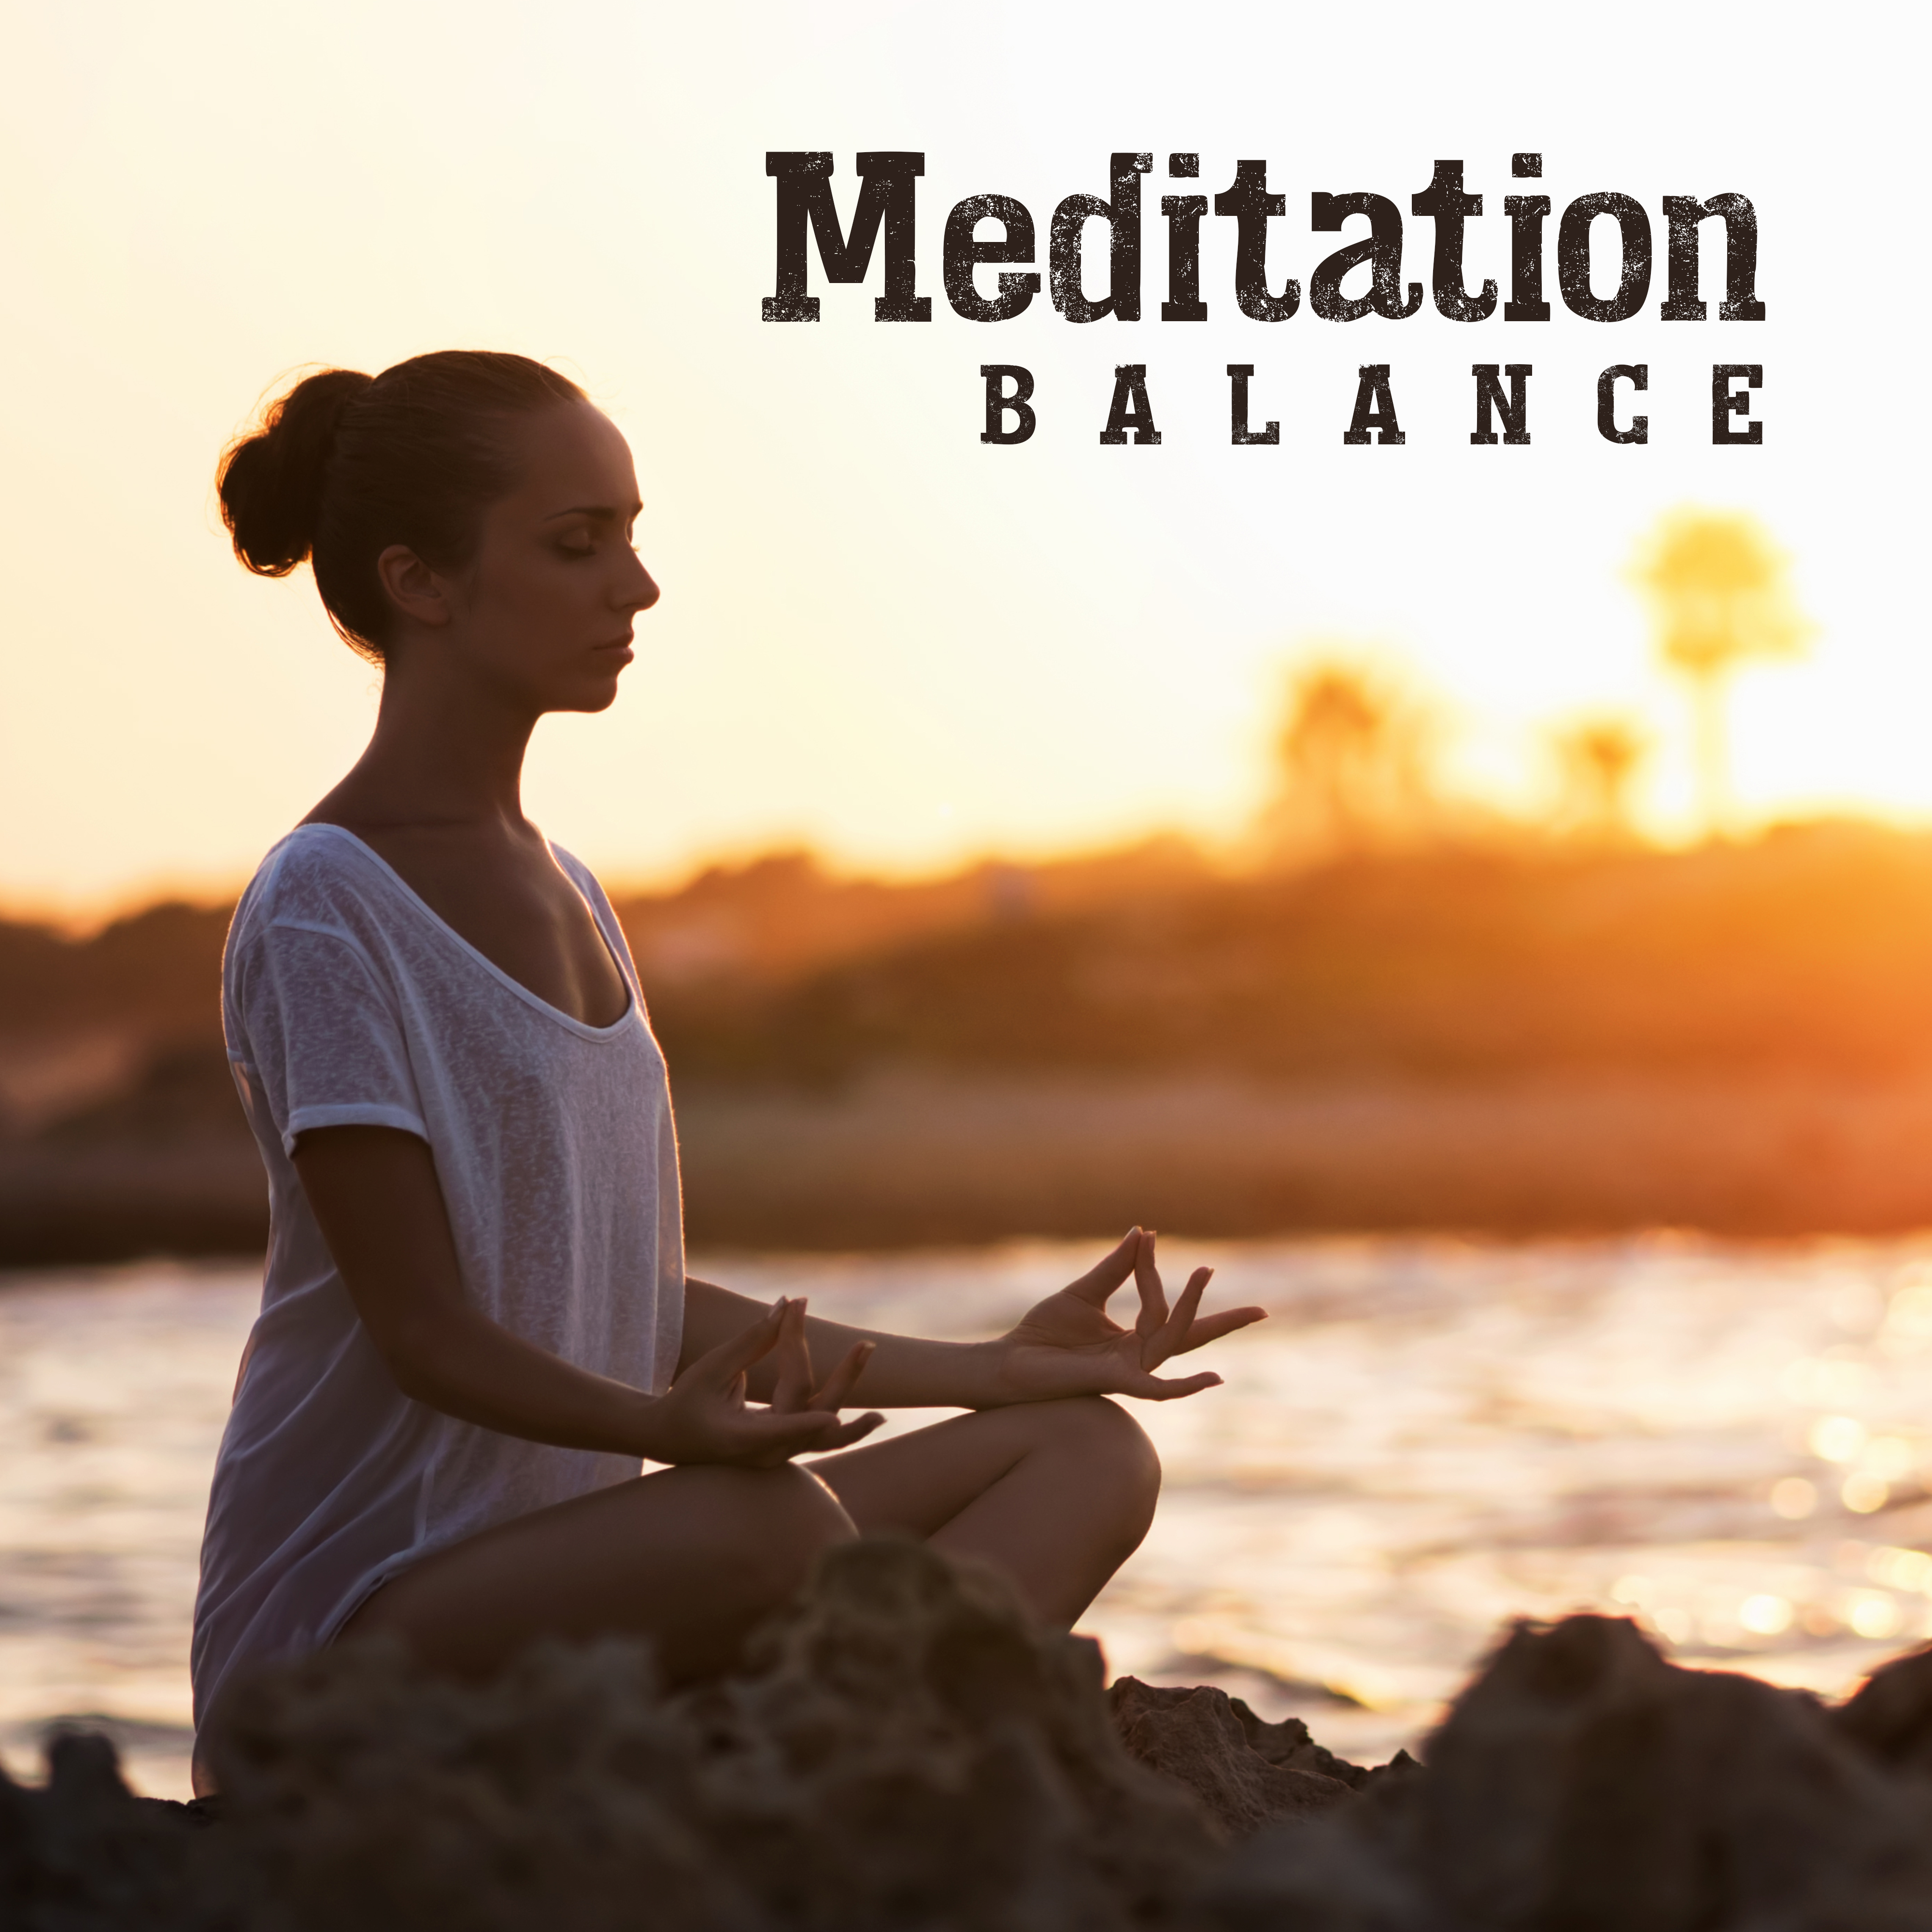 Meditation Balance